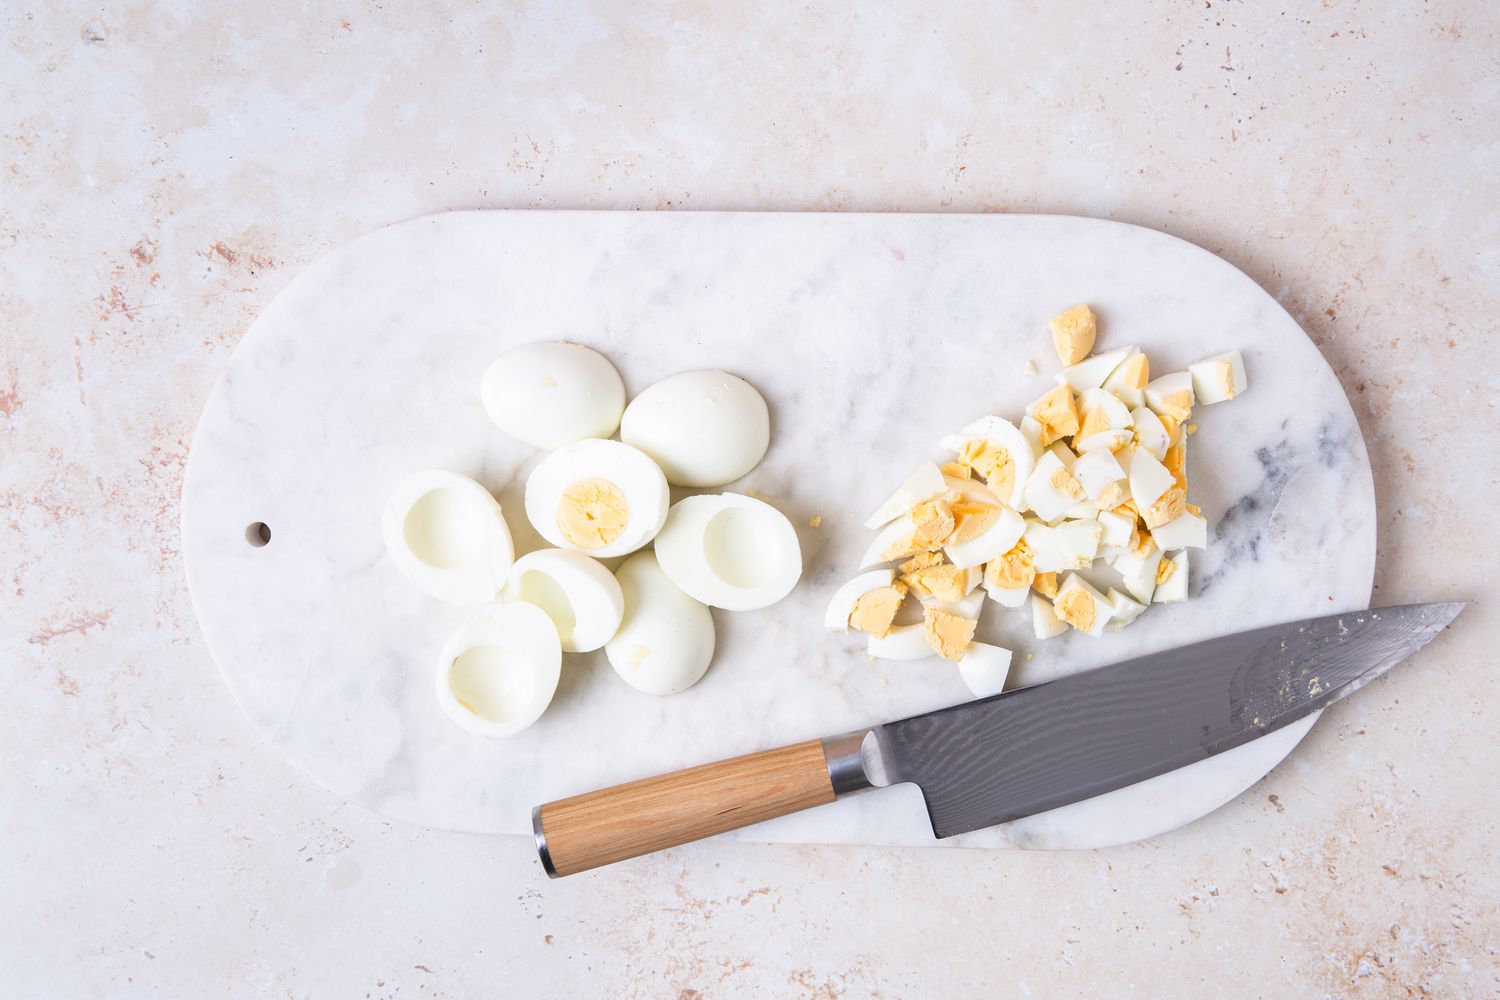 diced eggs on a cutting board